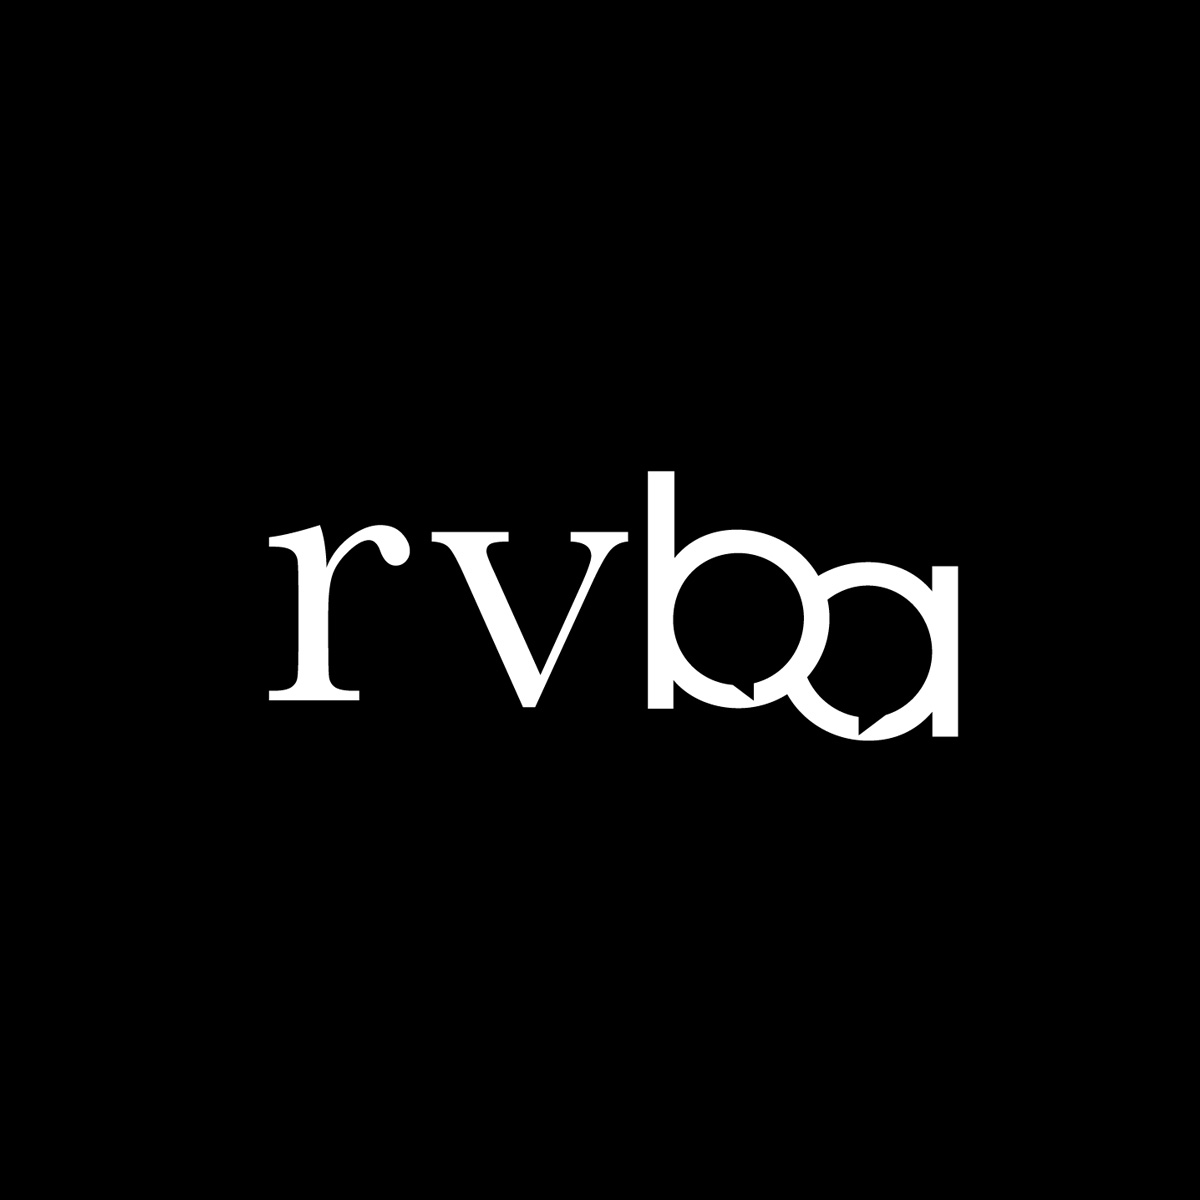 Raritan Valley Business Alliance typographic logo